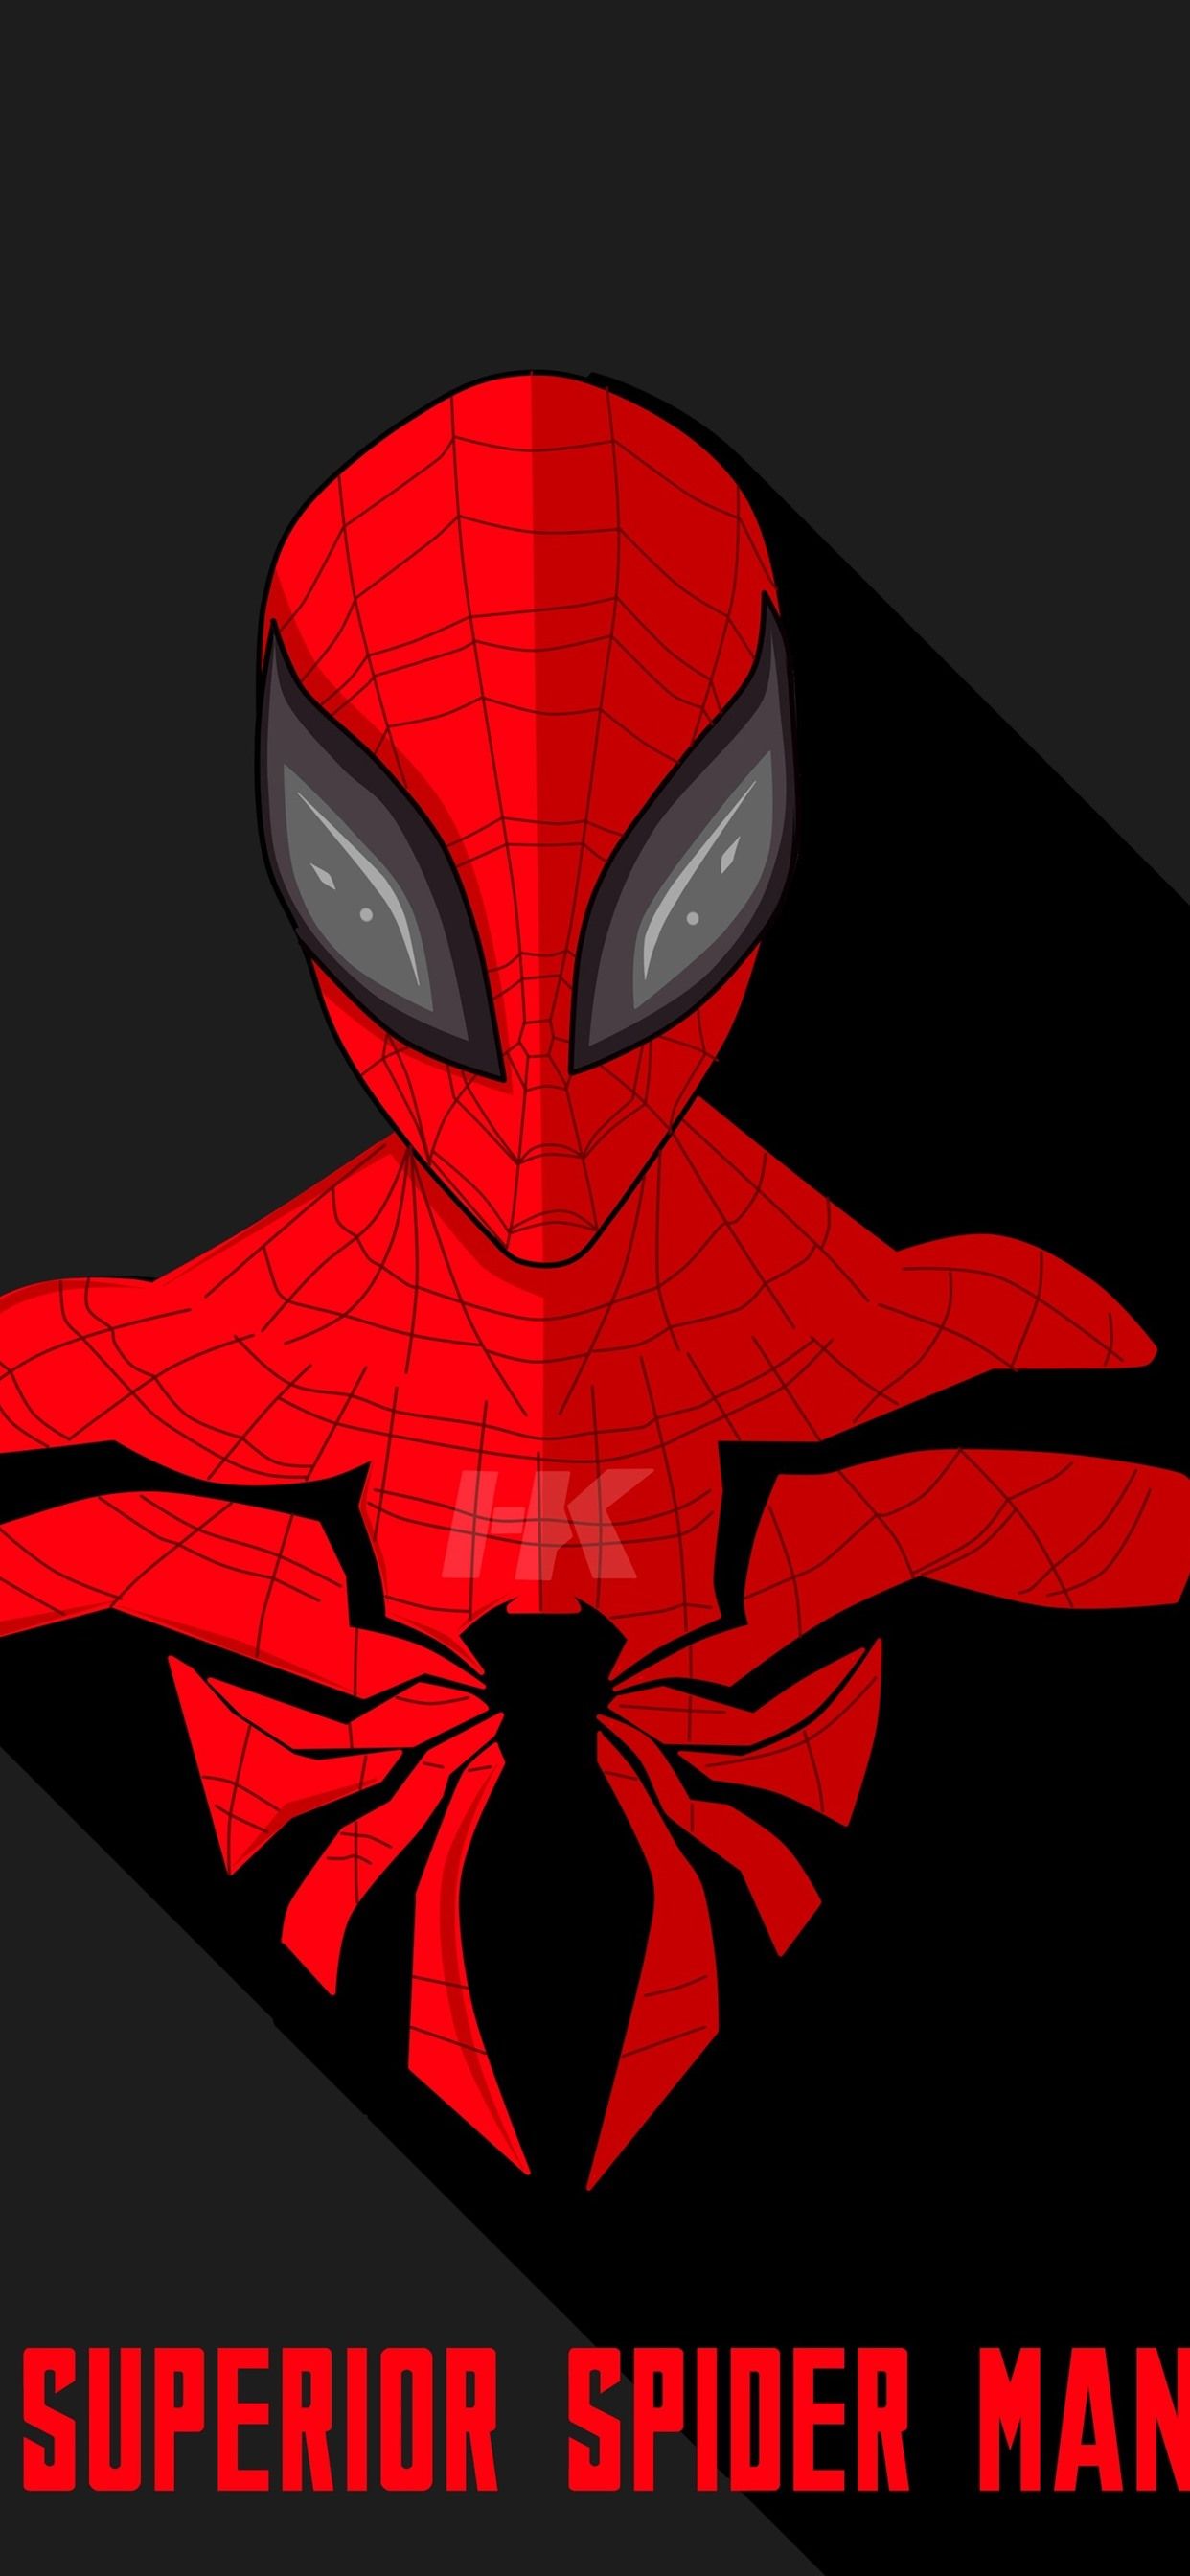 IPhone Wallpaper Spider Man, Dc Comics Hero Spider Man